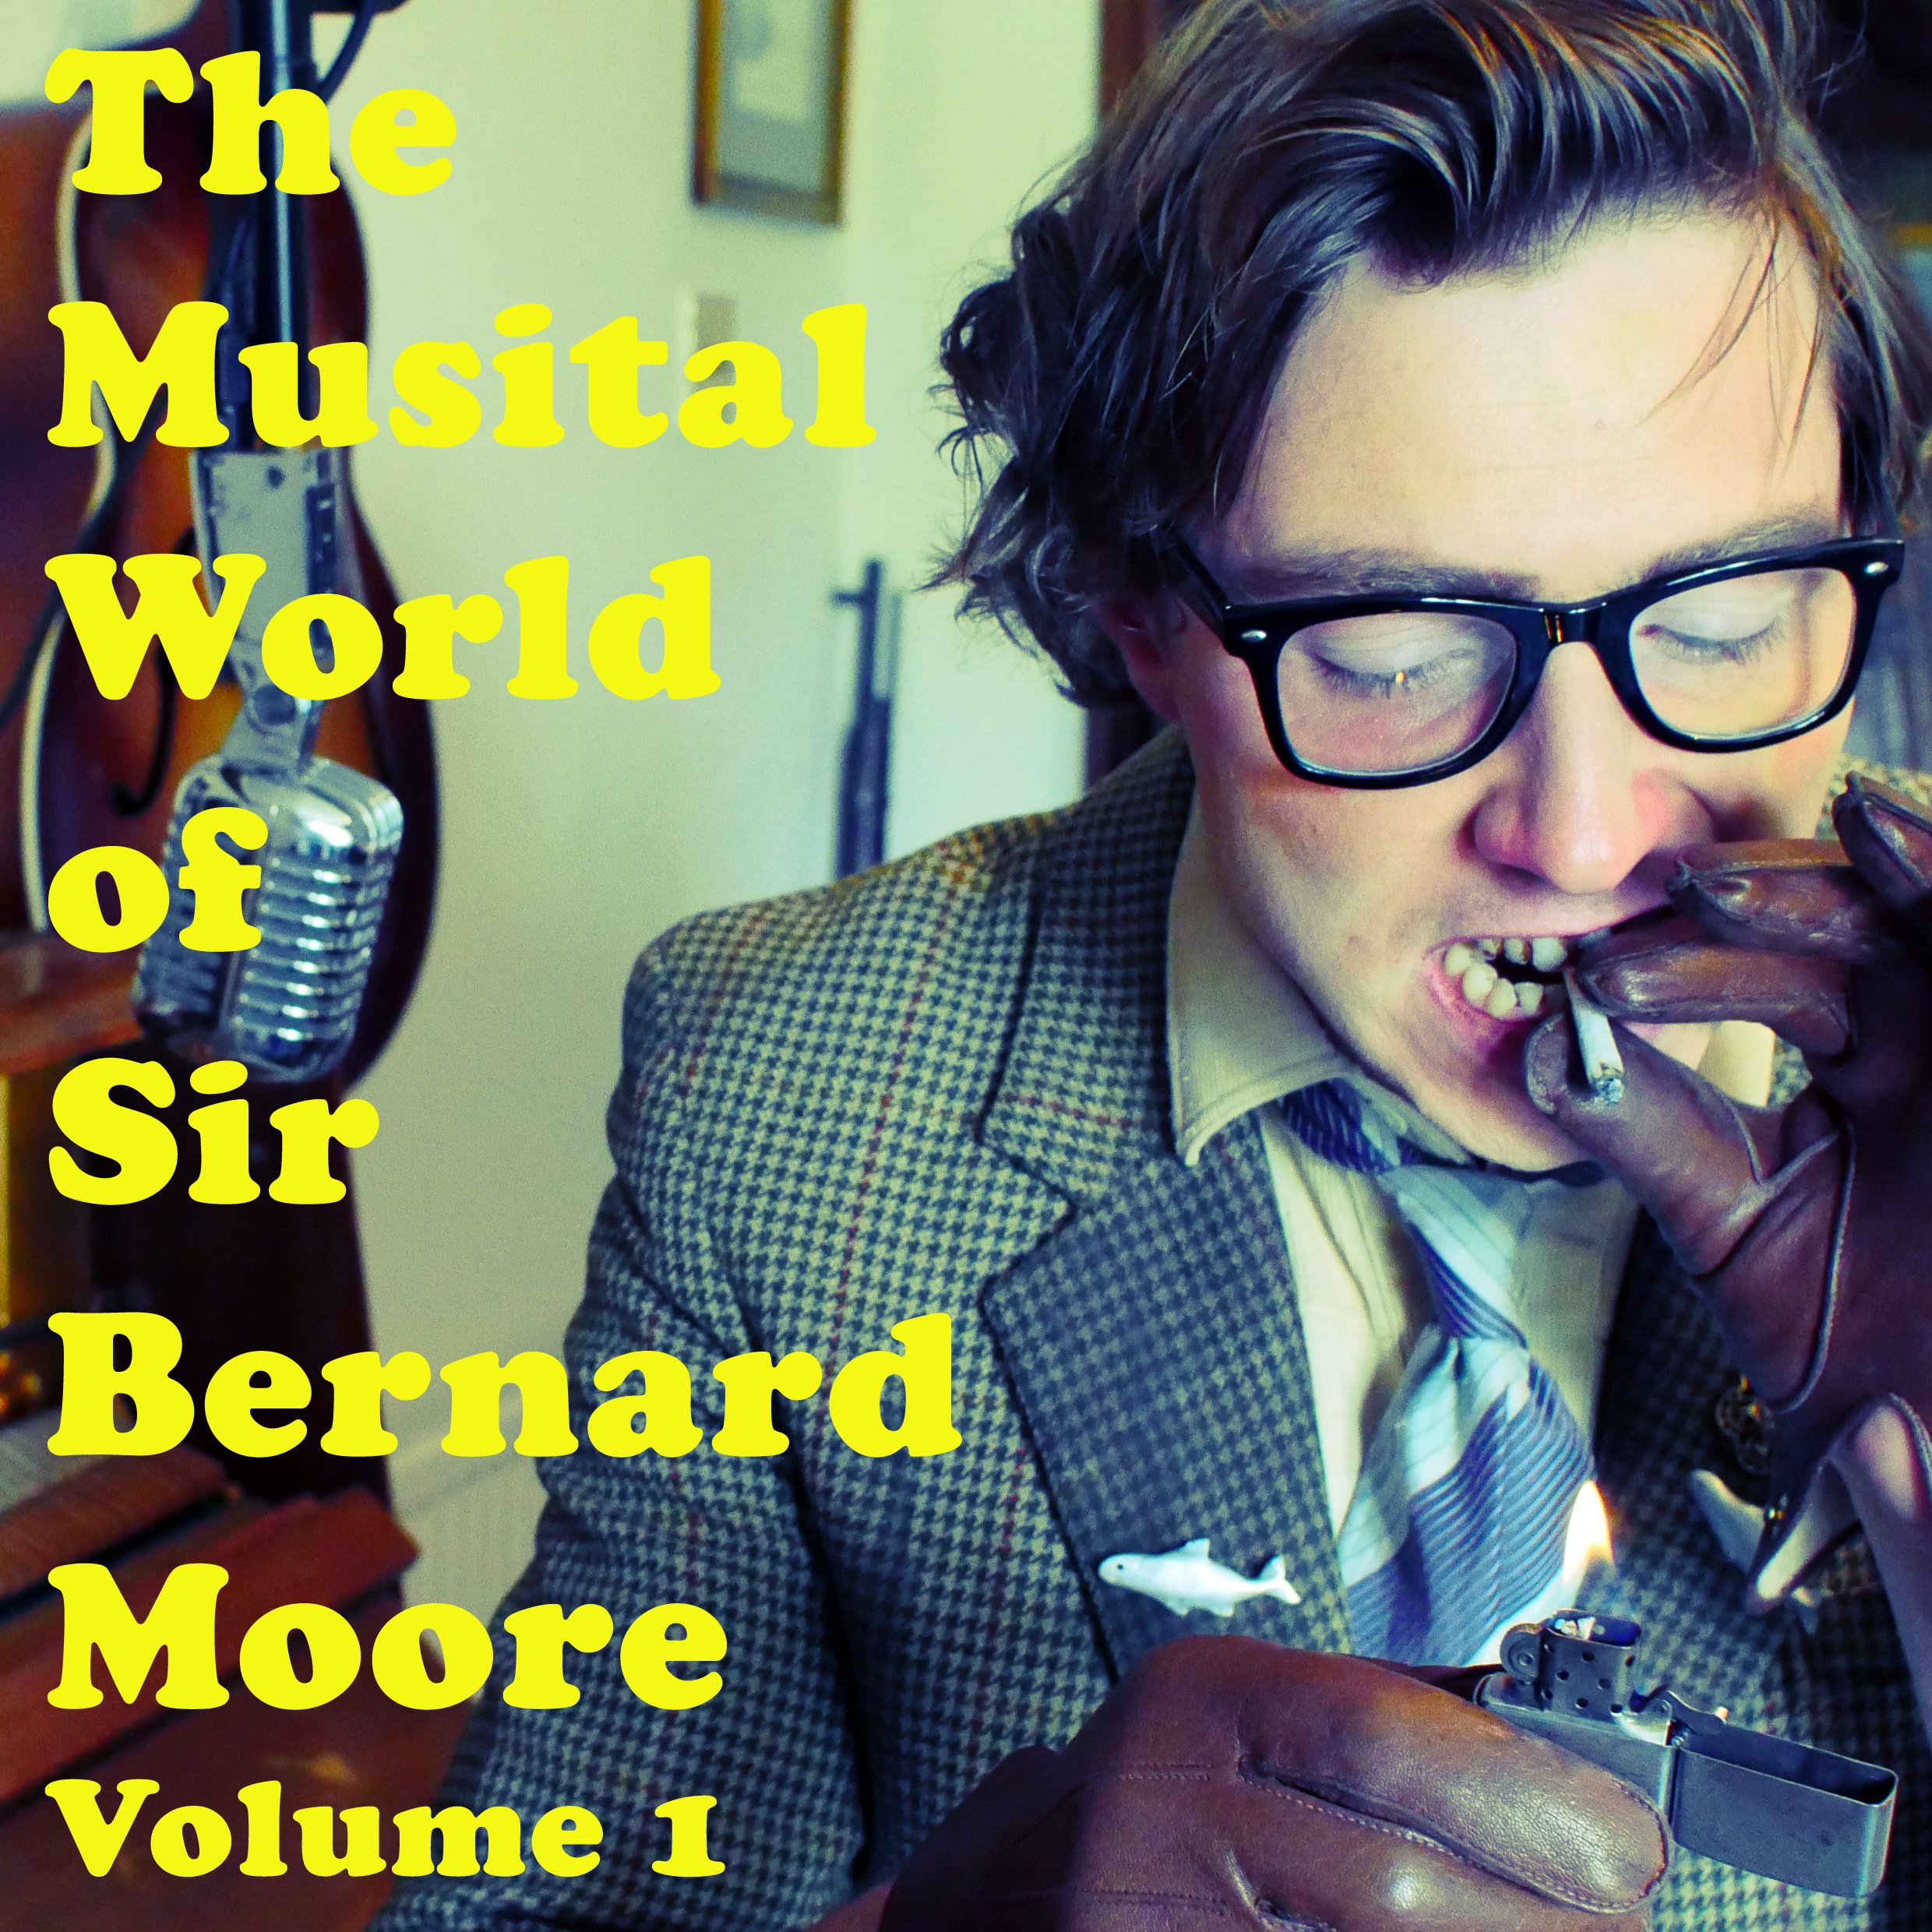 The Musital World of Sir Bernard Moore Volume 1 - ALBUM ART.jpg